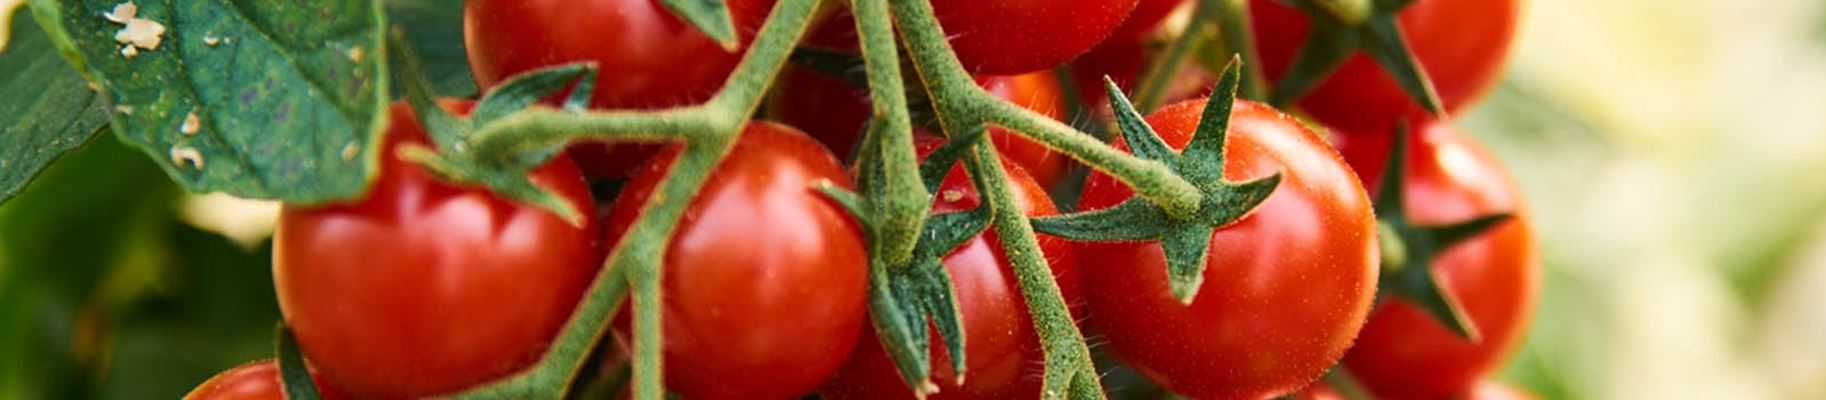 tomaten-anpflanzen-volmary.jpg